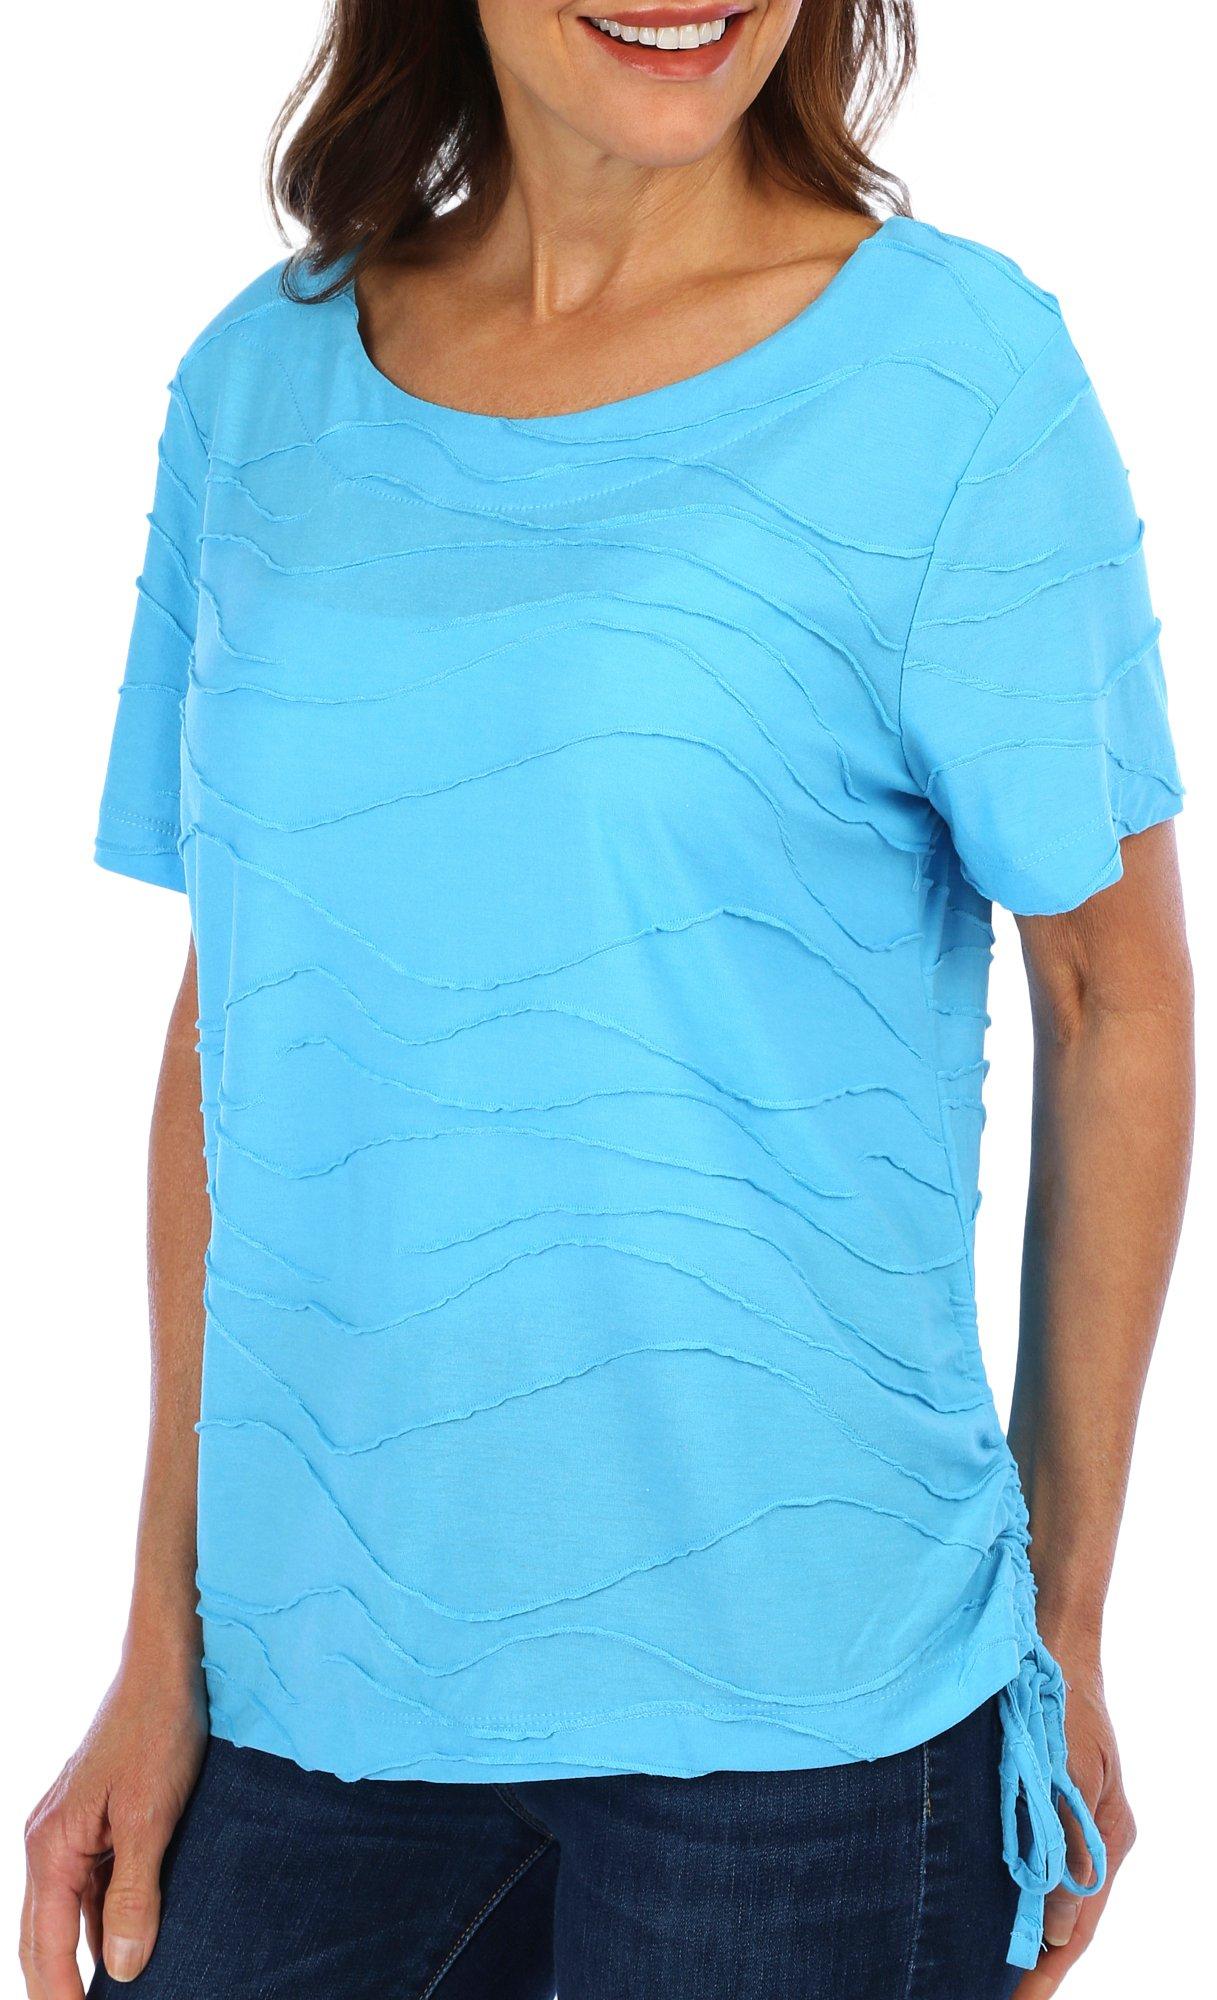 Coral Bay Womens Textured Scoop Neck Short Sleeve Top